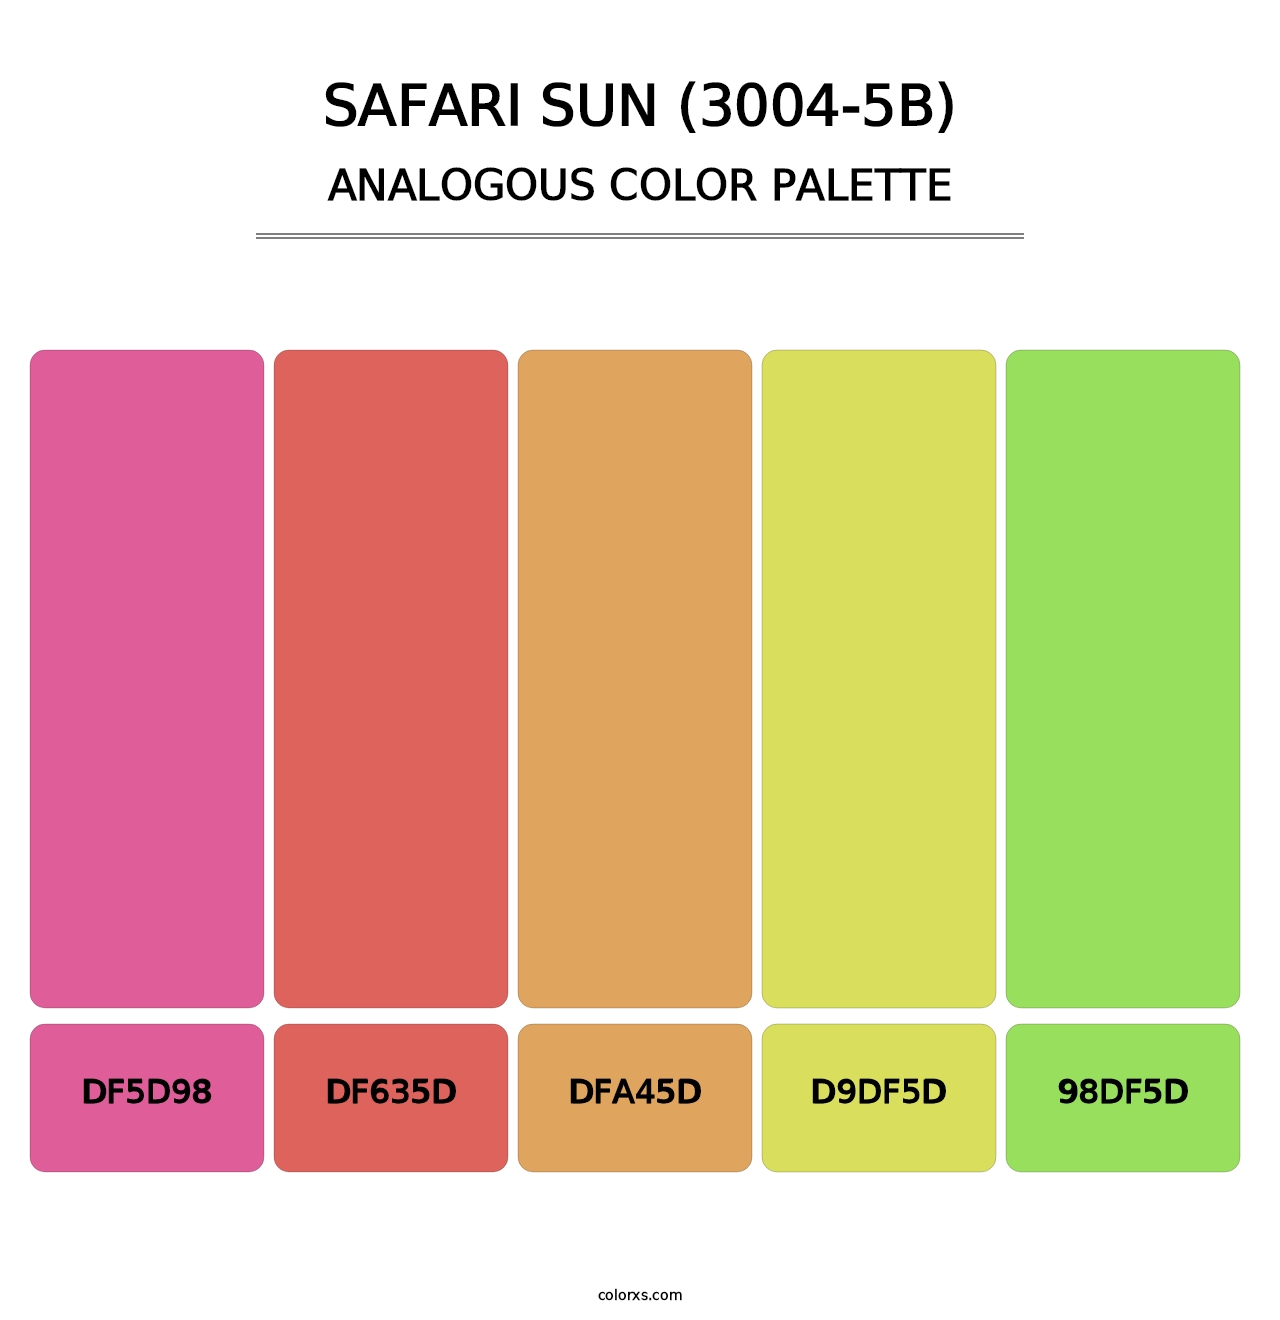 Safari Sun (3004-5B) - Analogous Color Palette